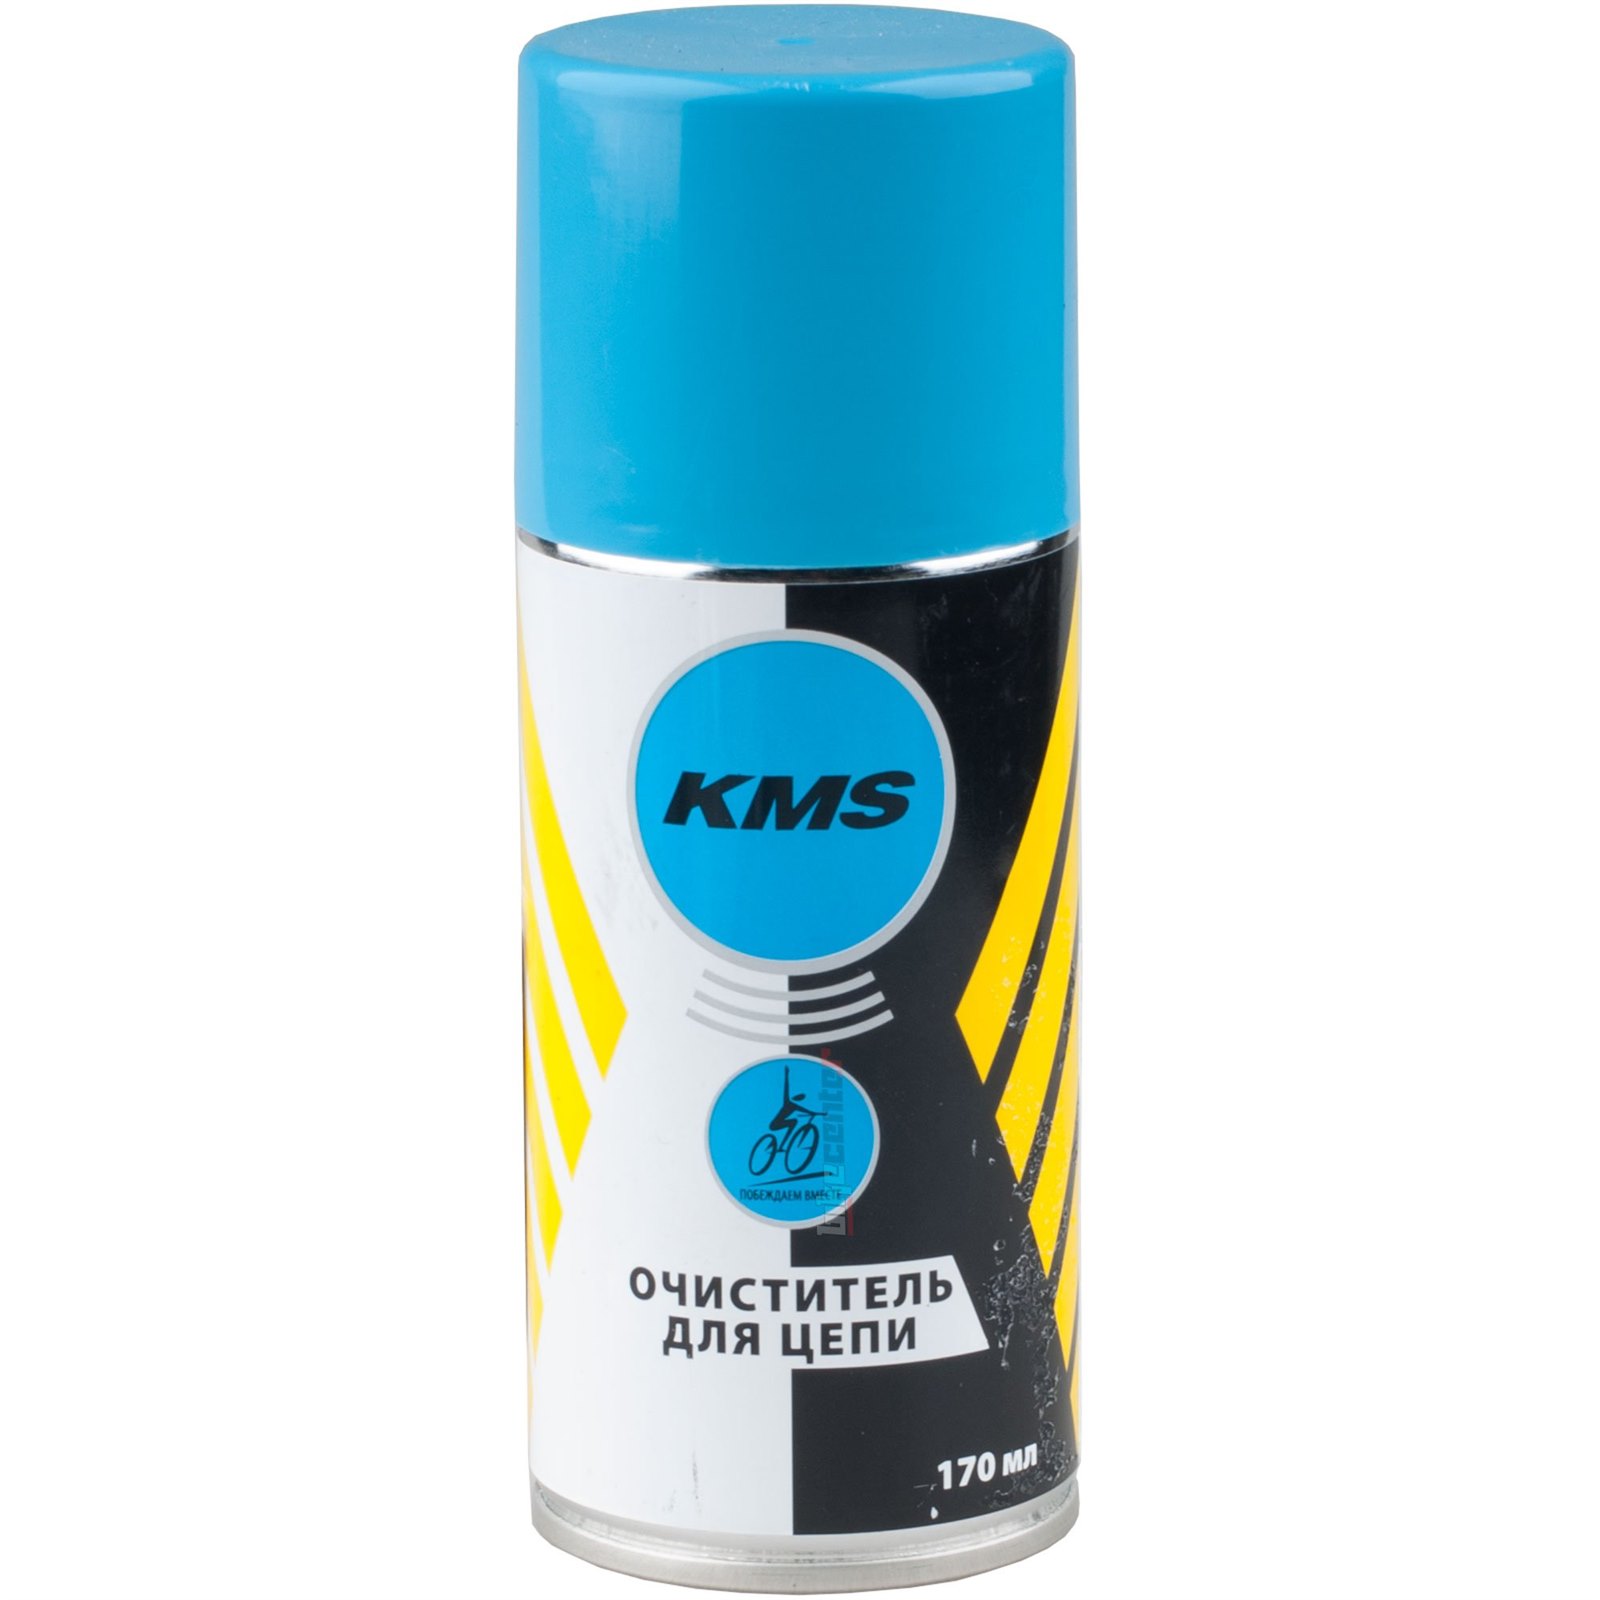 Очиститель для цепи, KMS, аэрозоль, 170 г